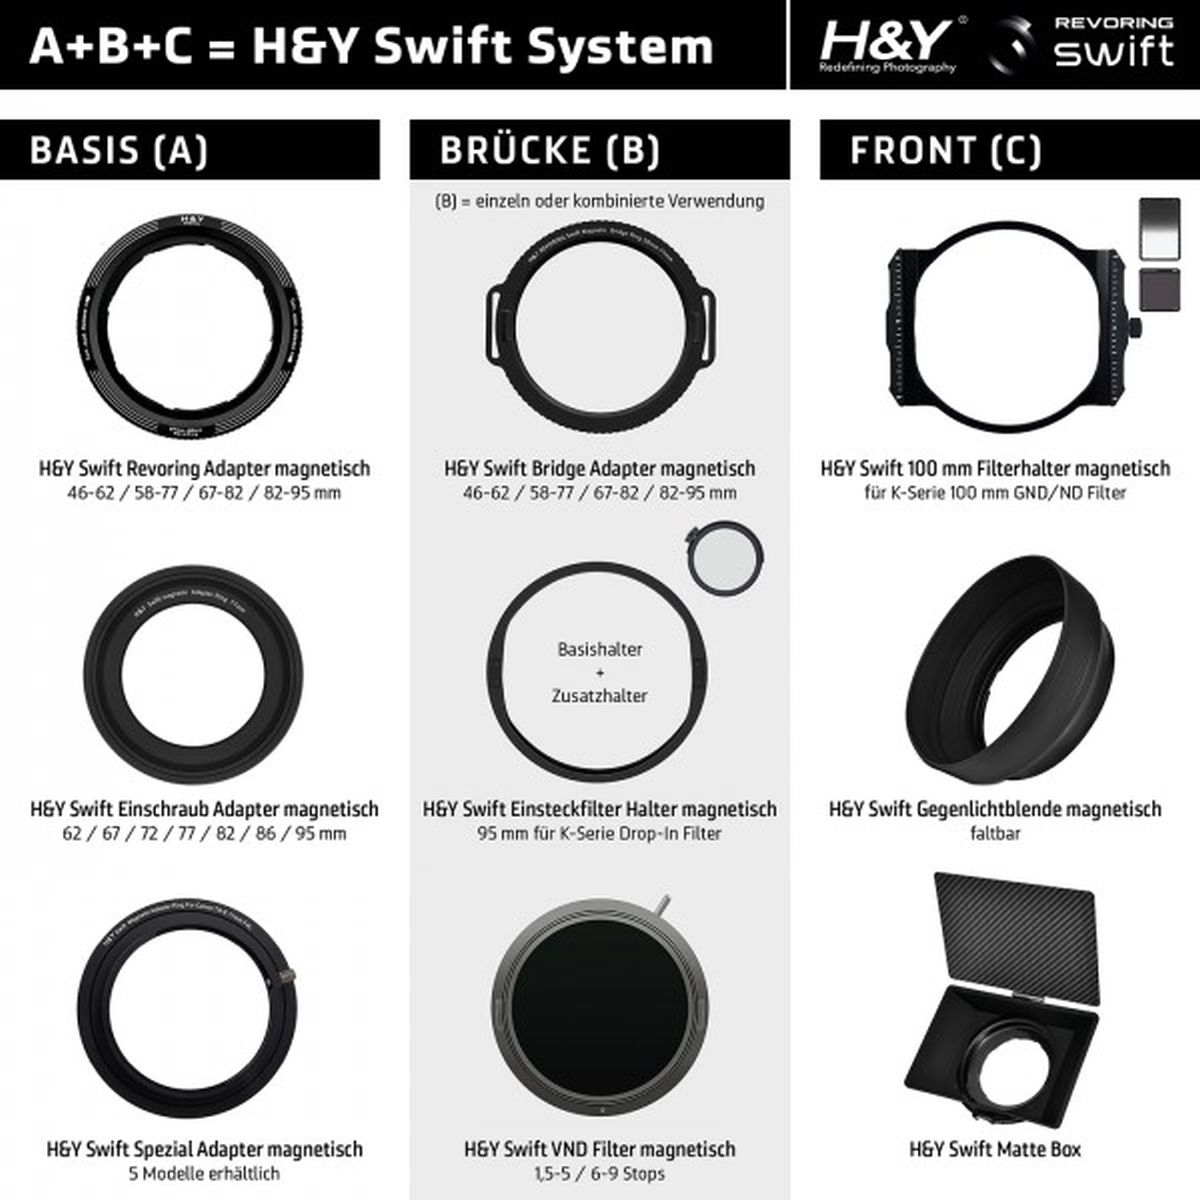 H&Y Swift A Revoring 46-62 mm Adapter magnetisch